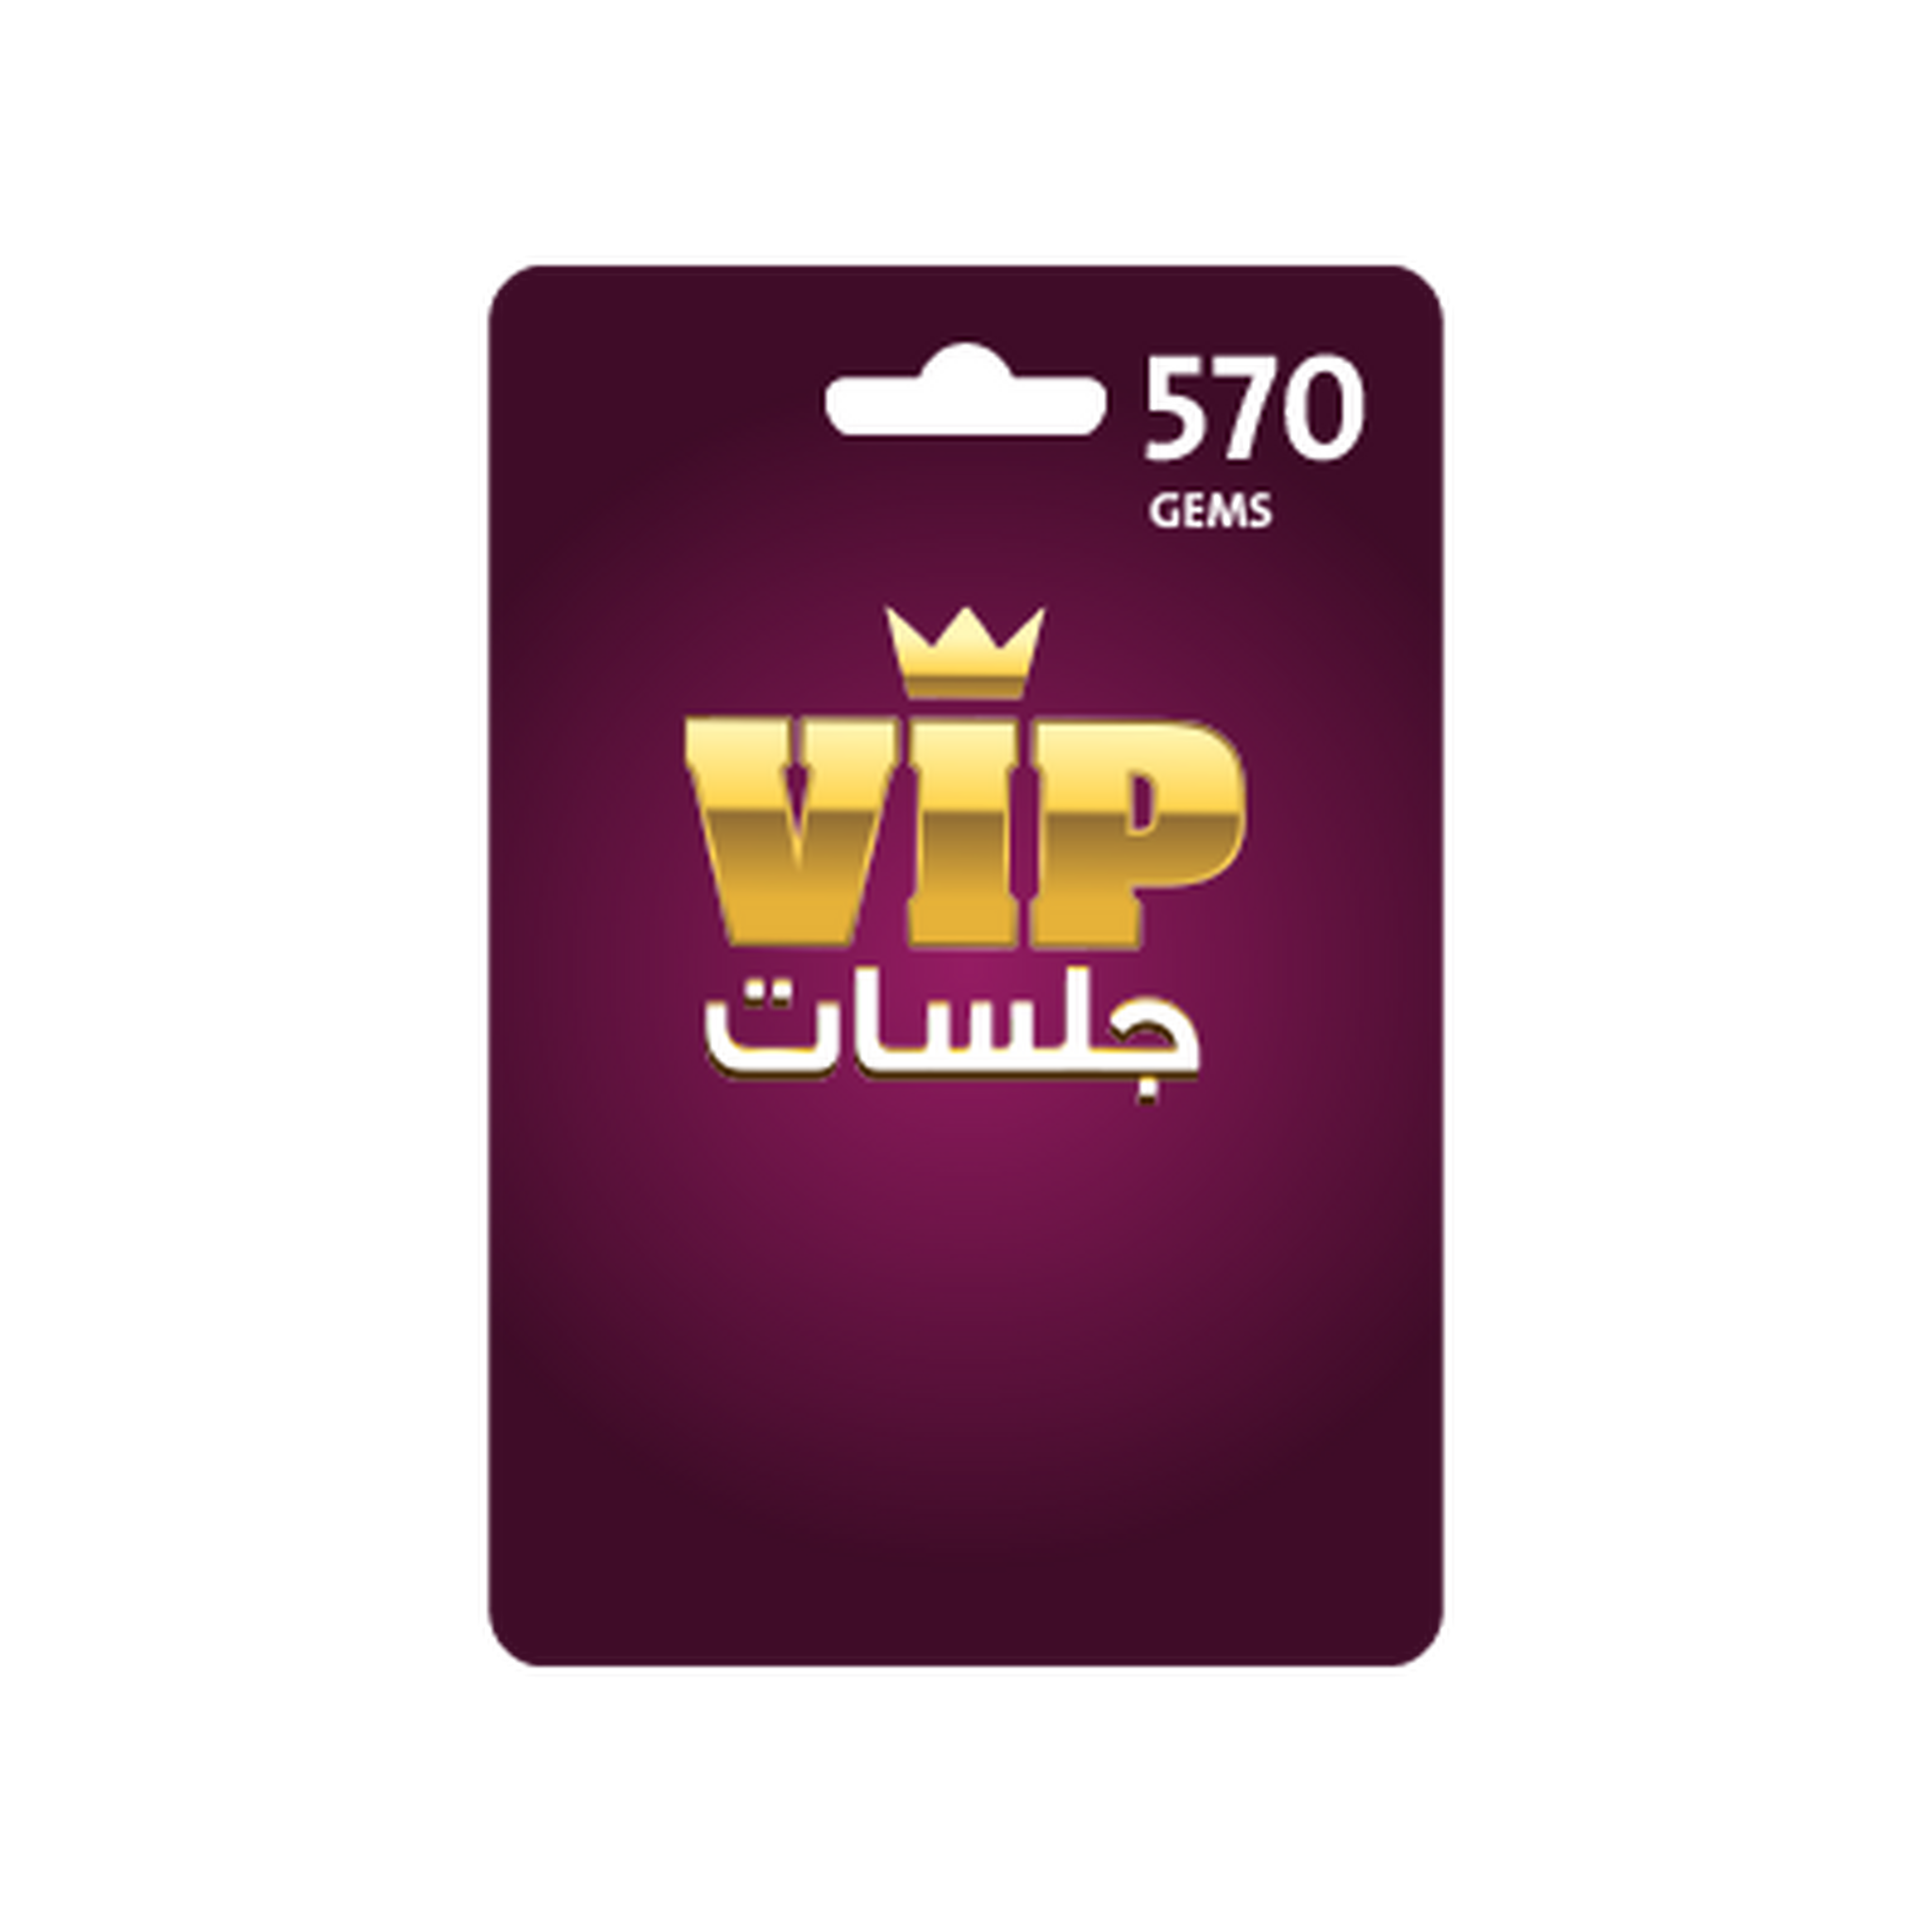 VIP Jalsat  570 Gems